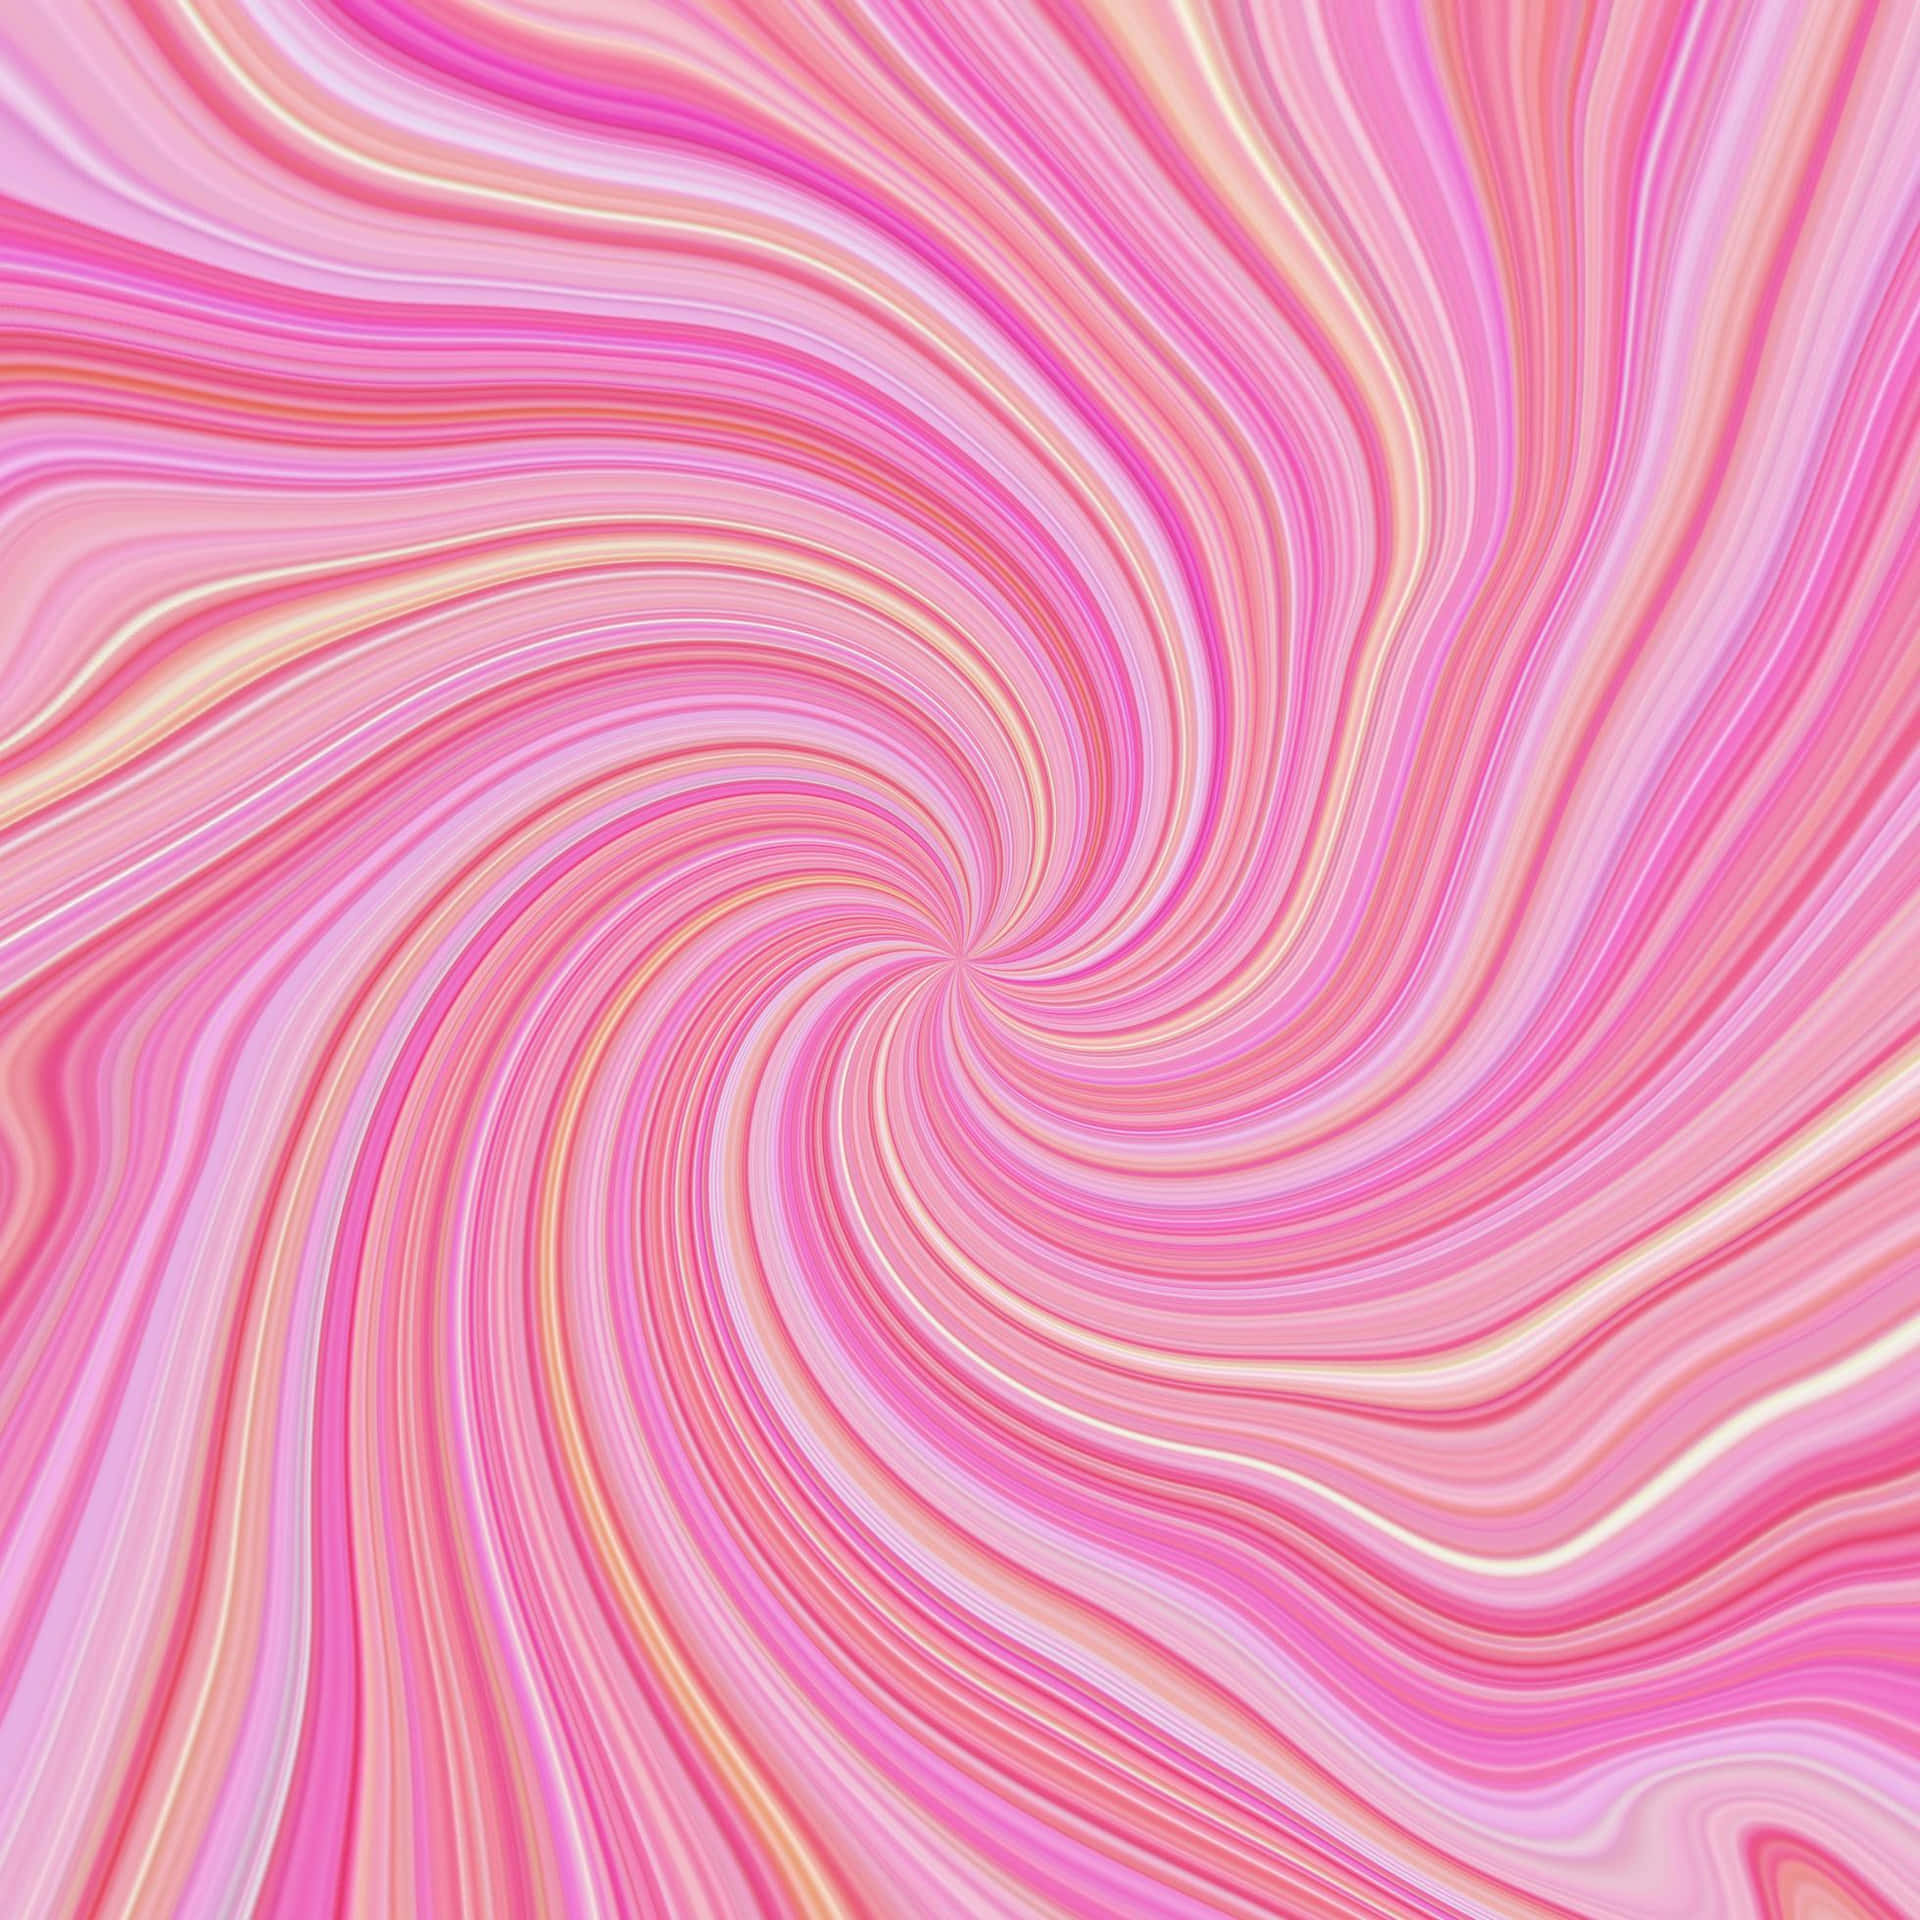 Stylish and Iridescent Pink Swirl Background